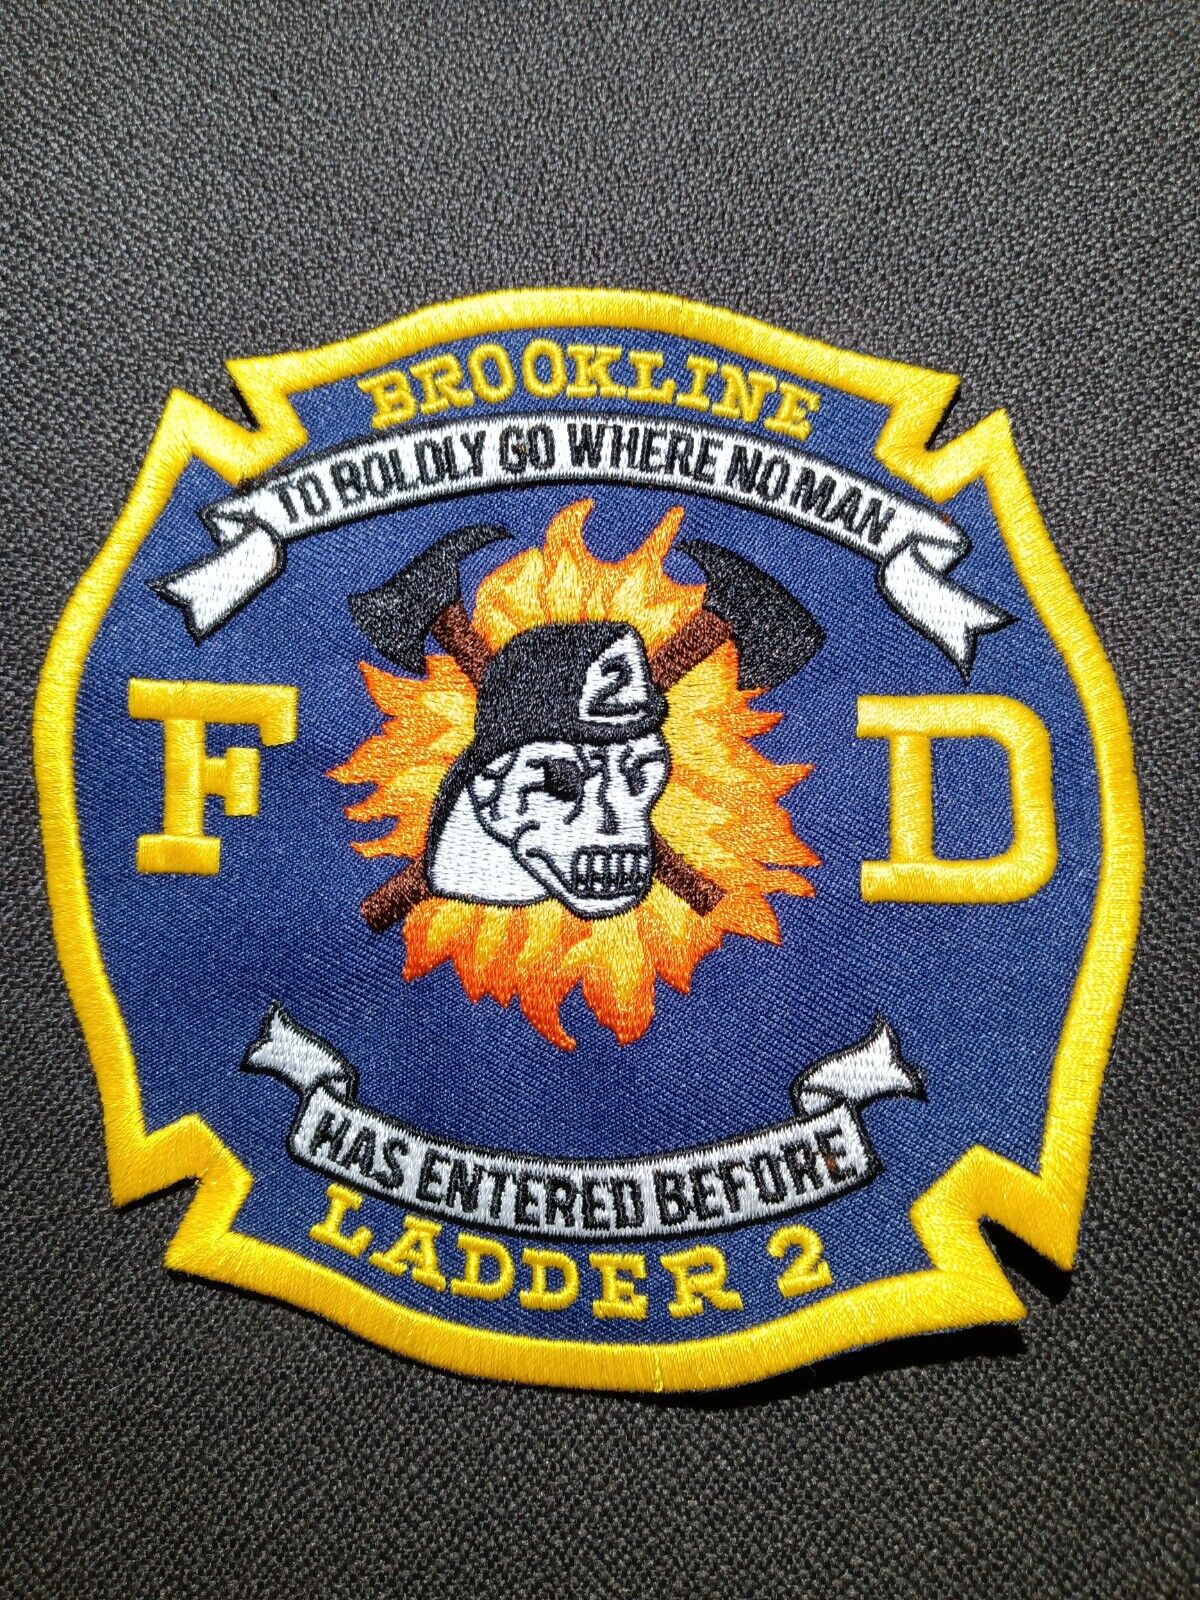 Brookline Fire Dept Ladder-2 Commemorative Patch MA NH NY NJ RI VA PA MD Boston